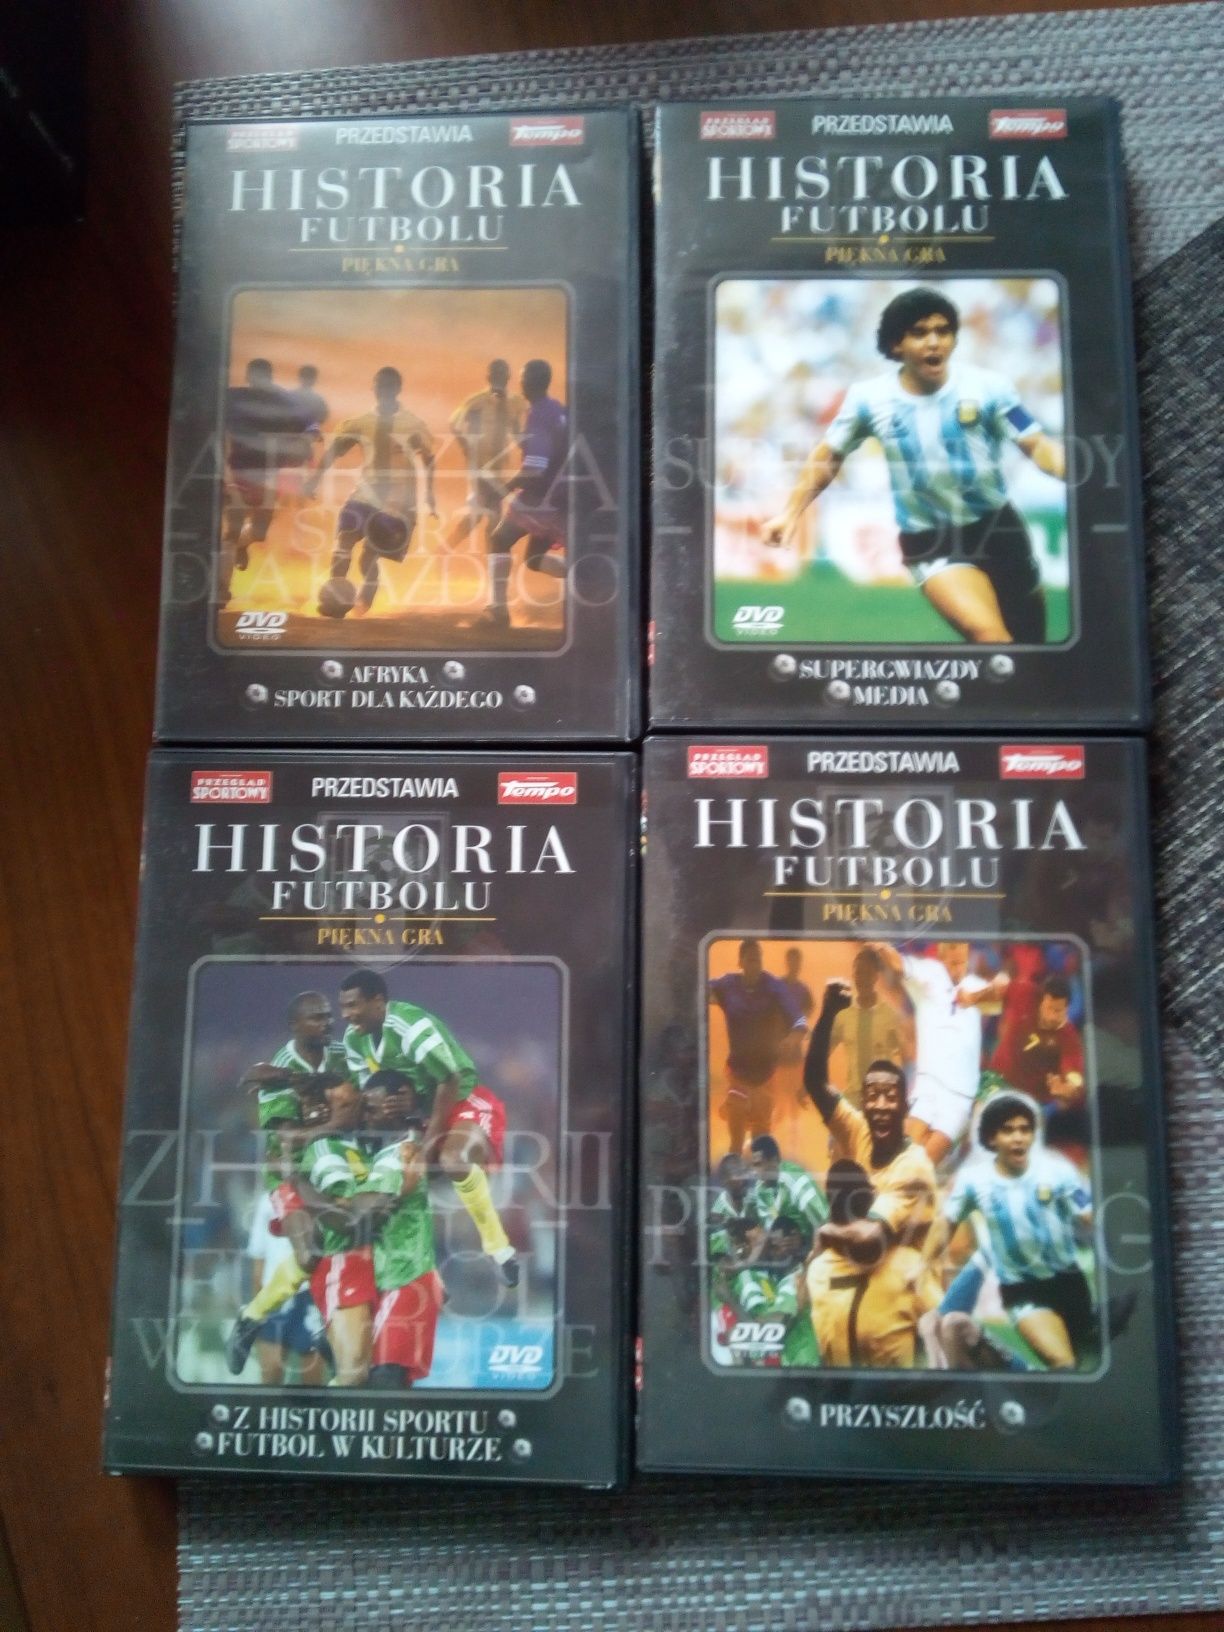 Historia futbolu piękna gra komplet nowy dvd kolekcja Pele